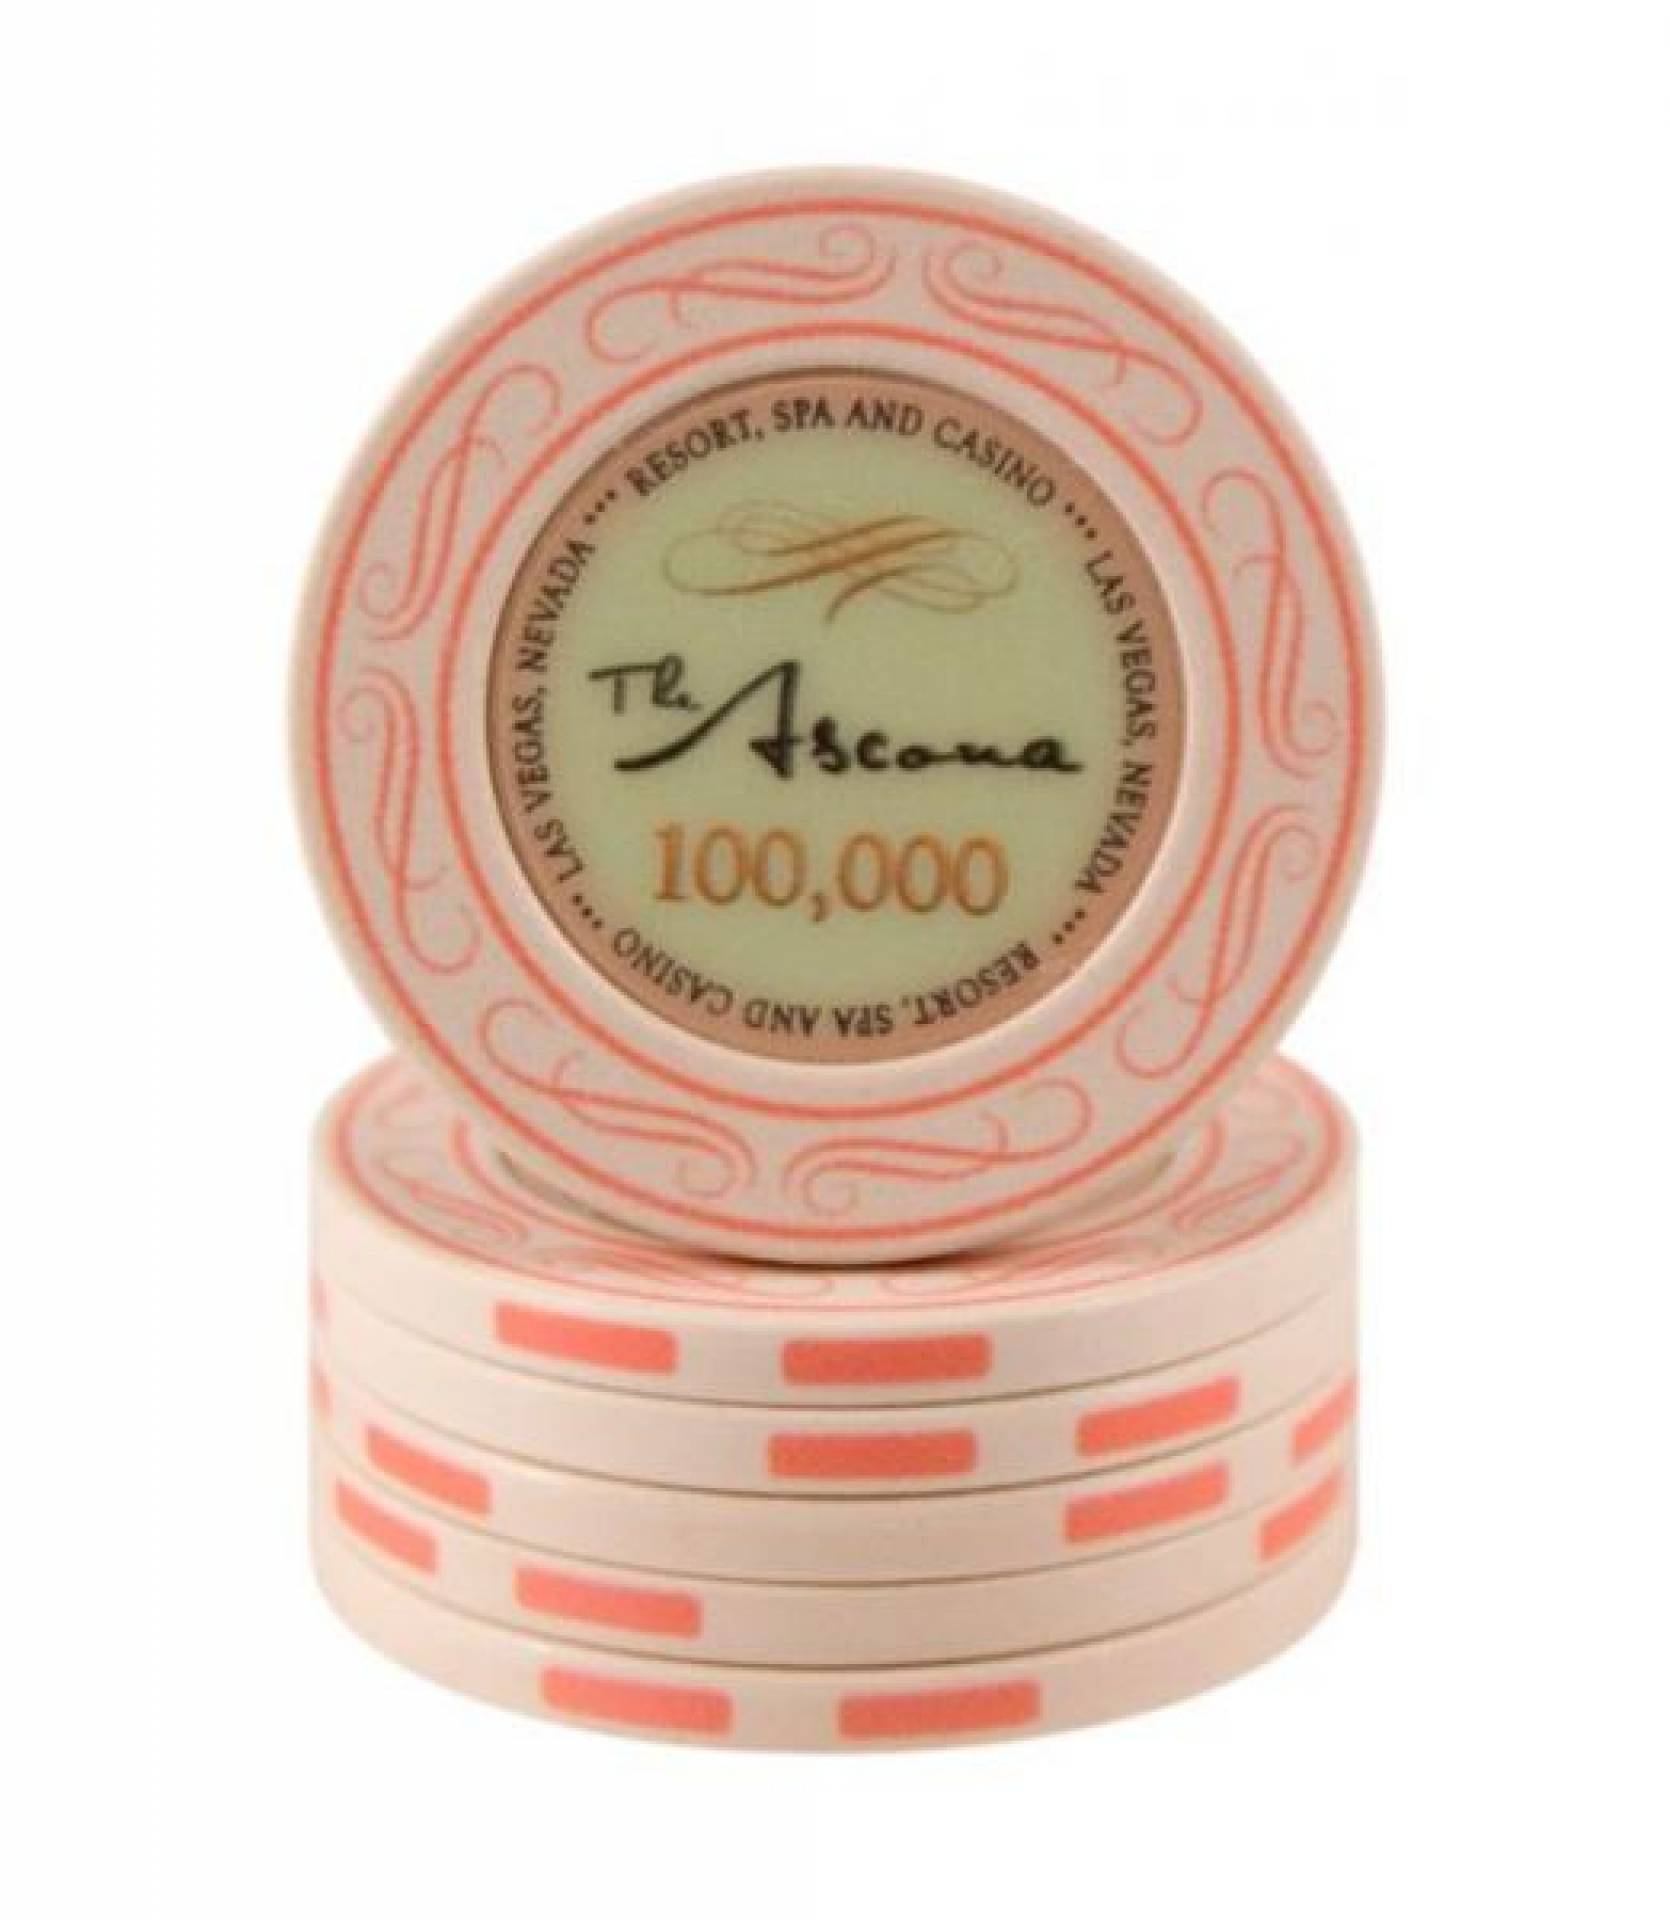 Poker chip The Ascona - hodnota 100.000